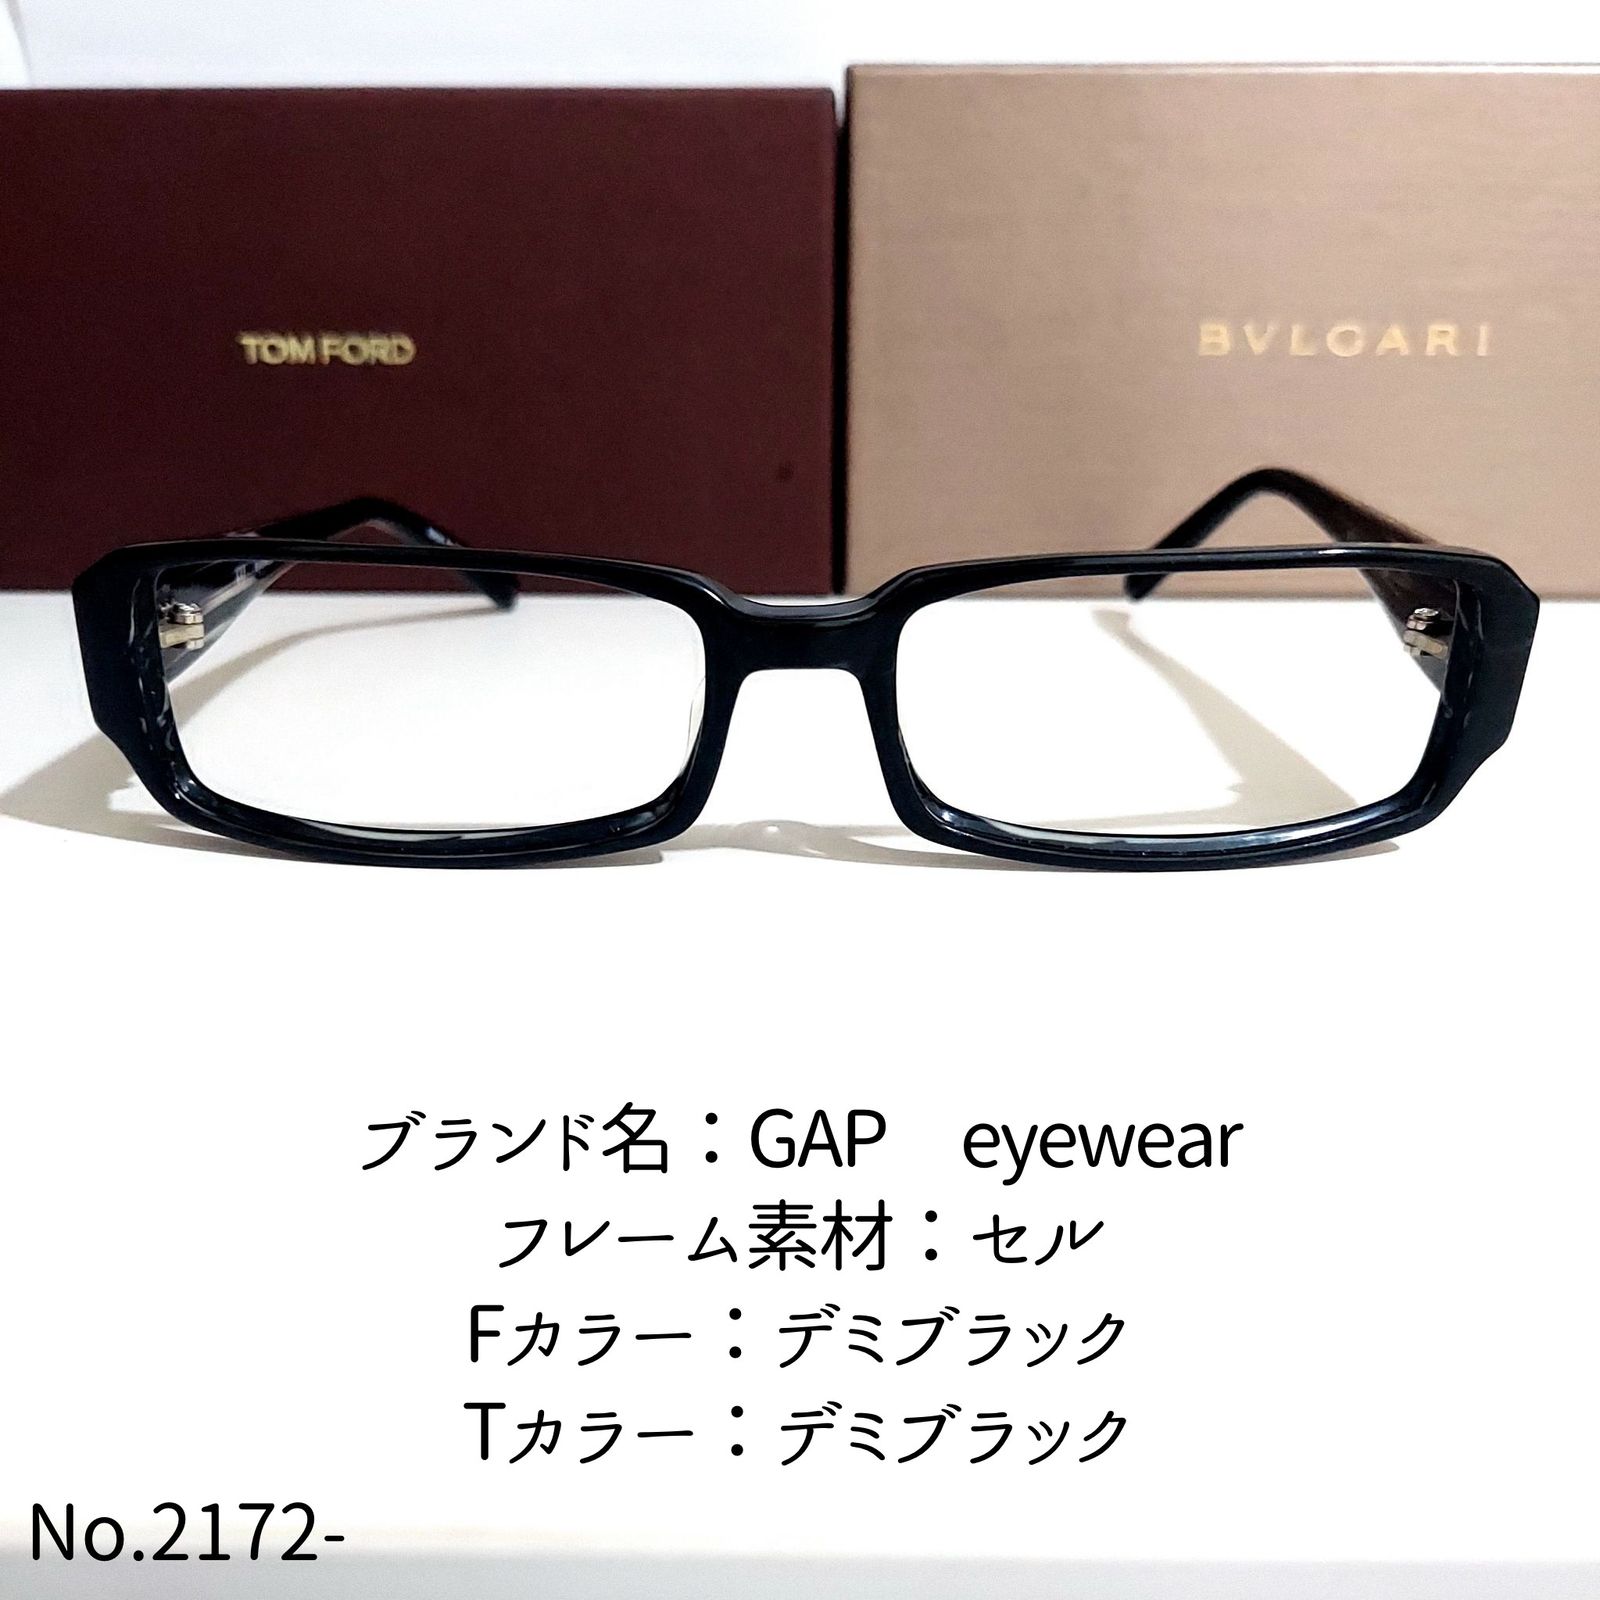 No.2172-メガネ GAP eyewear【フレームのみ価格】 - スッキリ生活専門